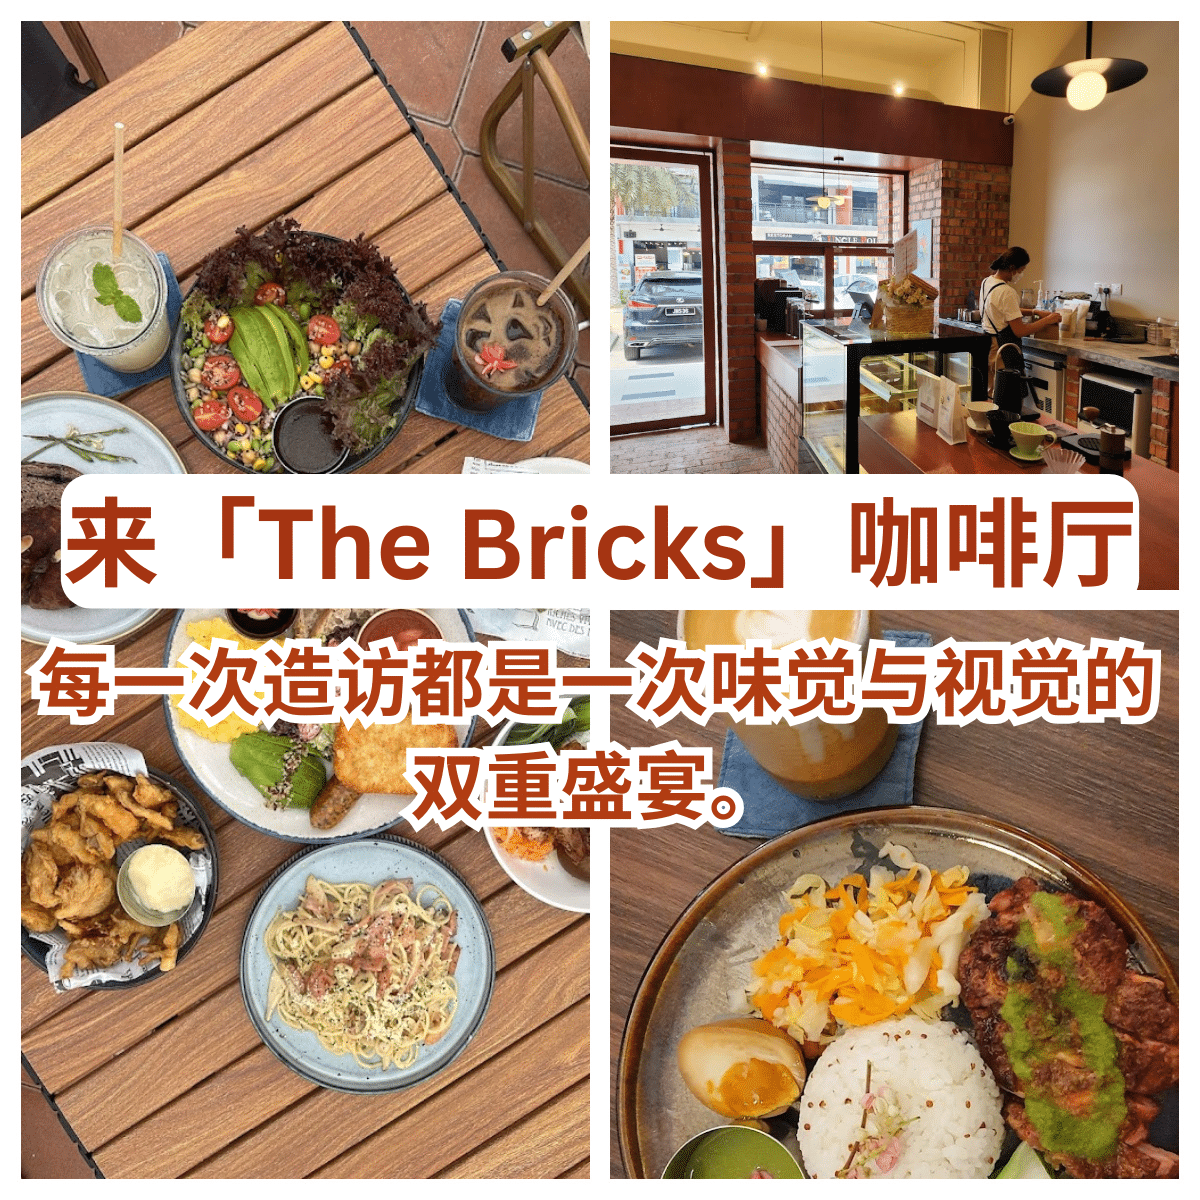 ” The Bricks 咖啡厅：Sunway City中的红砖奇迹，多元美食的至高享受！”